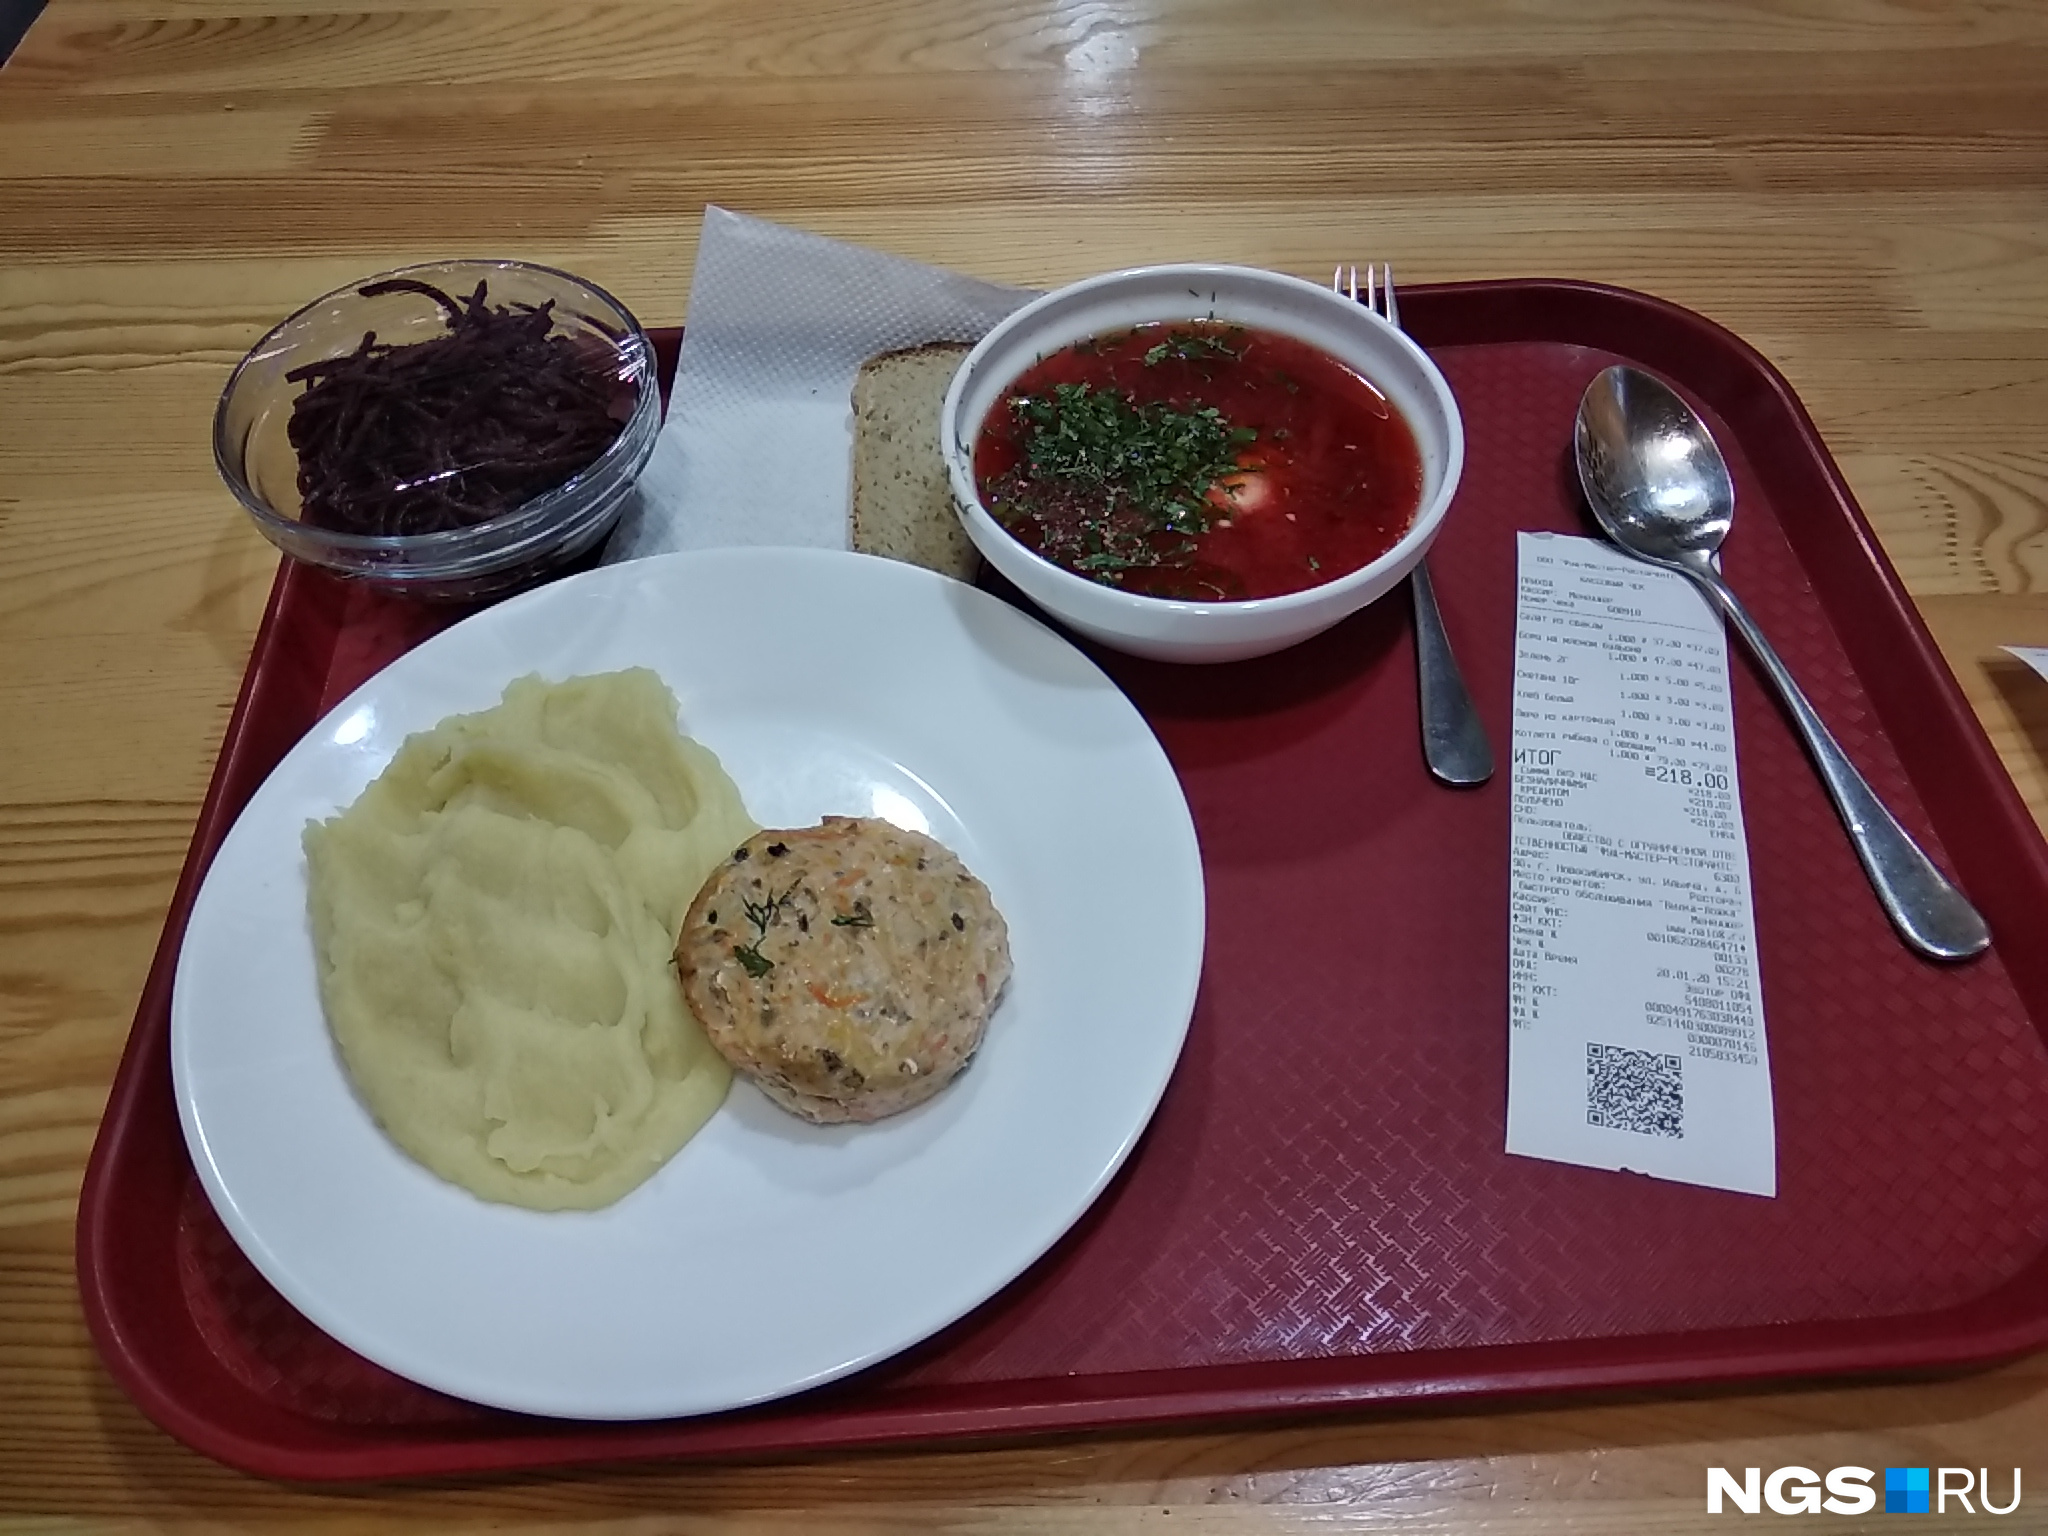 Обед из трёх блюд за 218 рублей